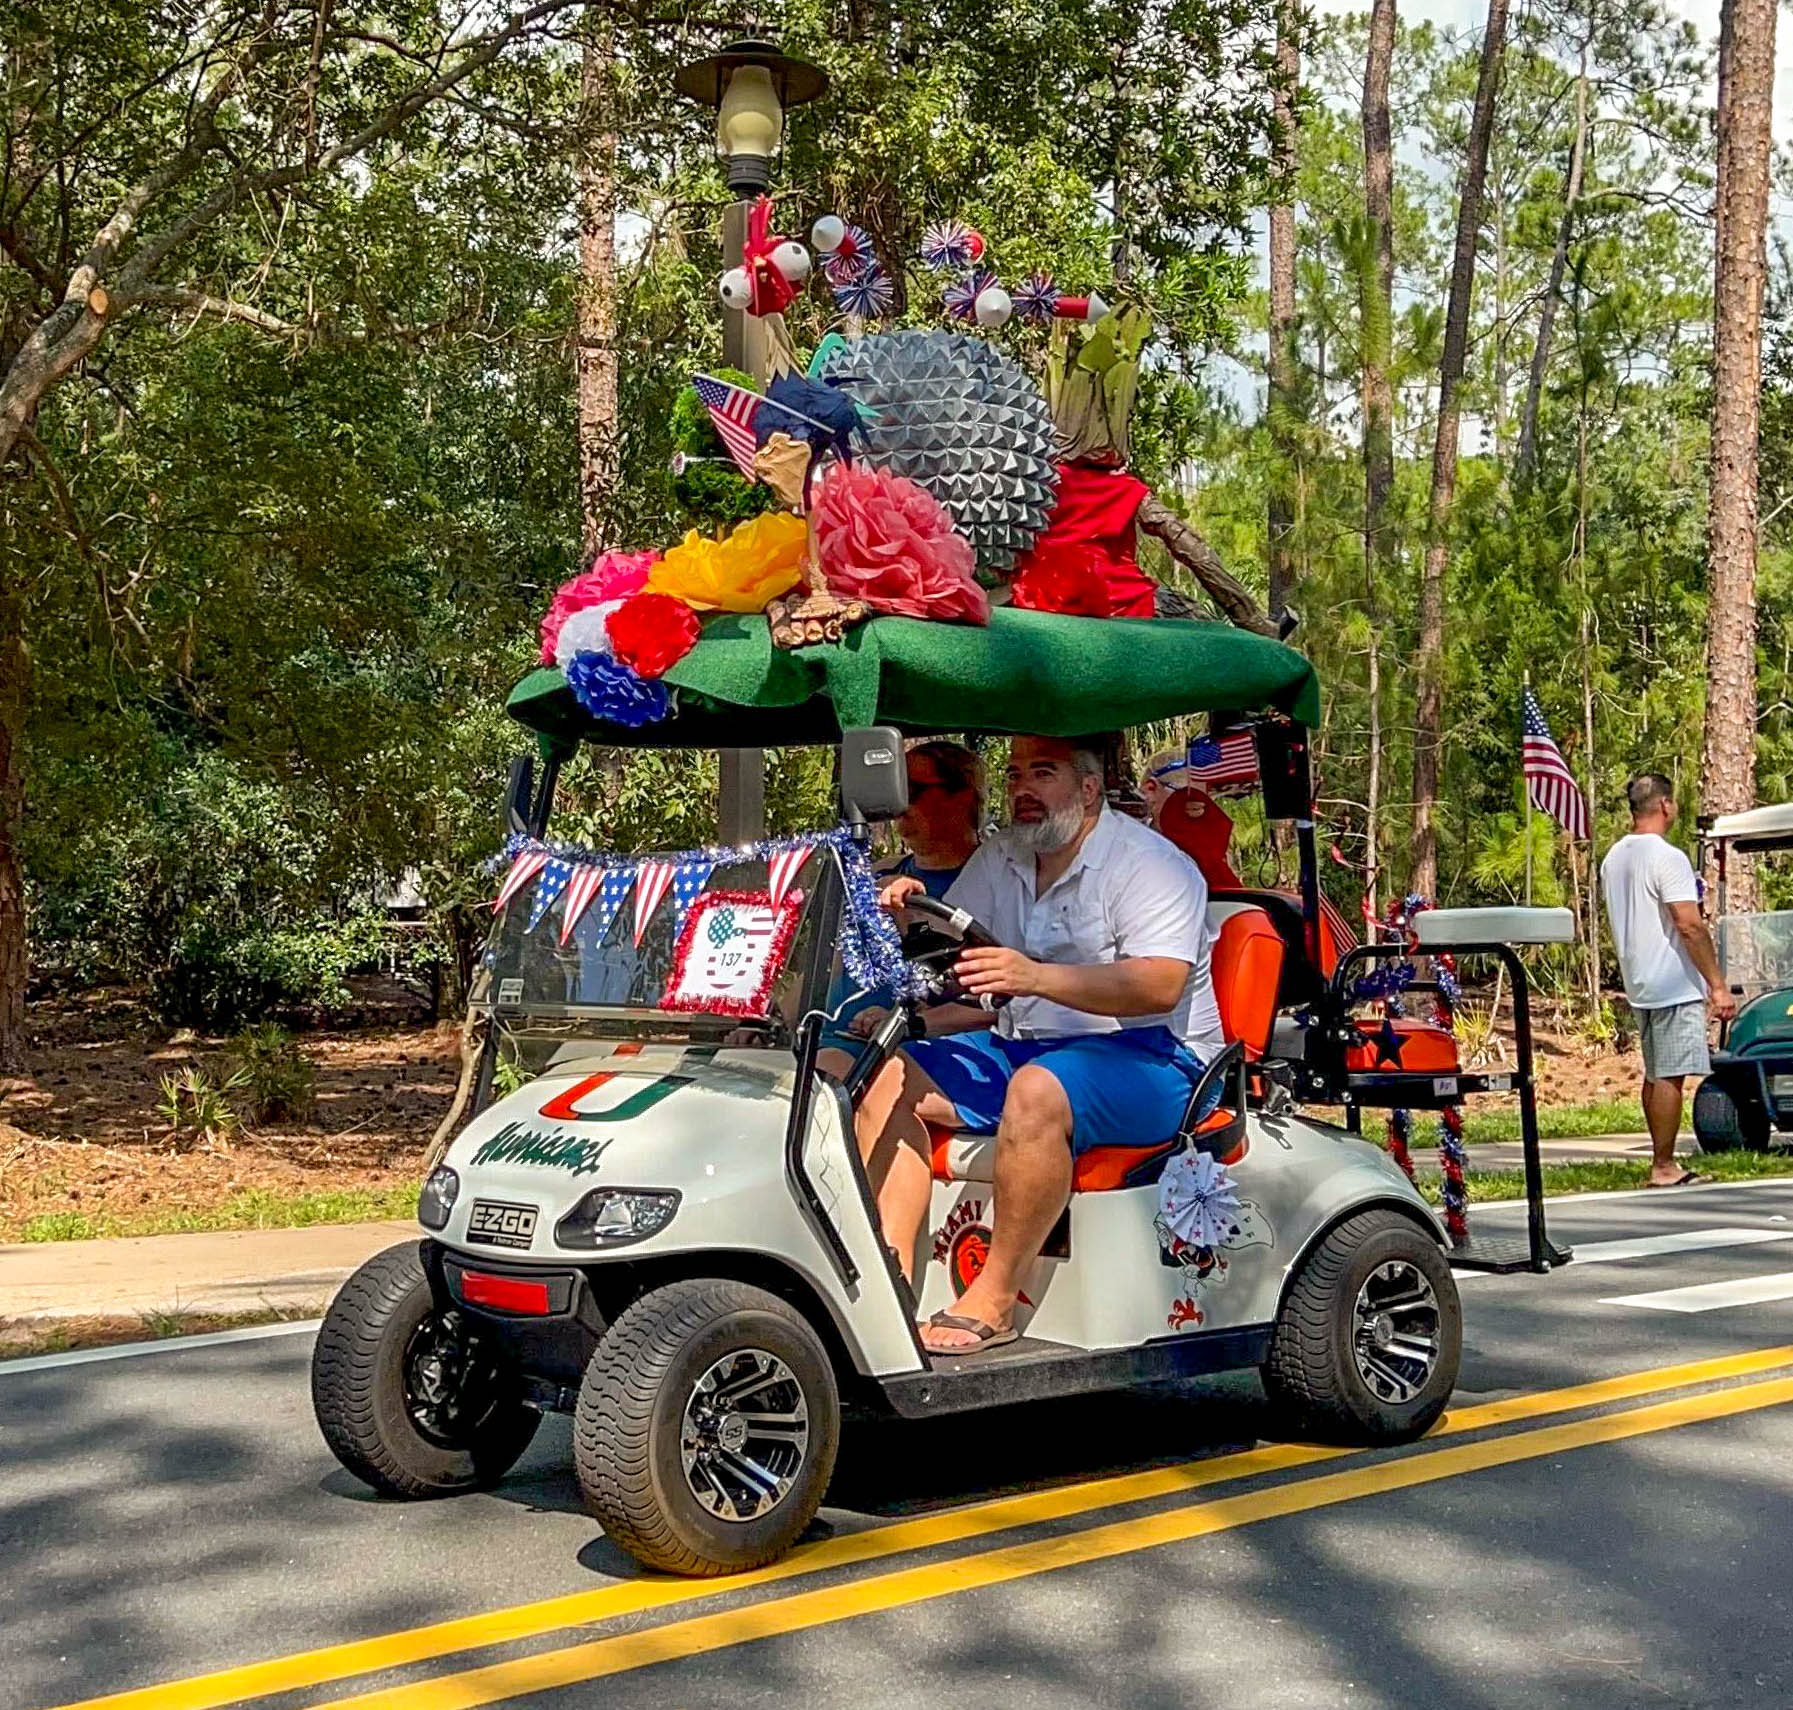 4th of July Golf Cart Parade